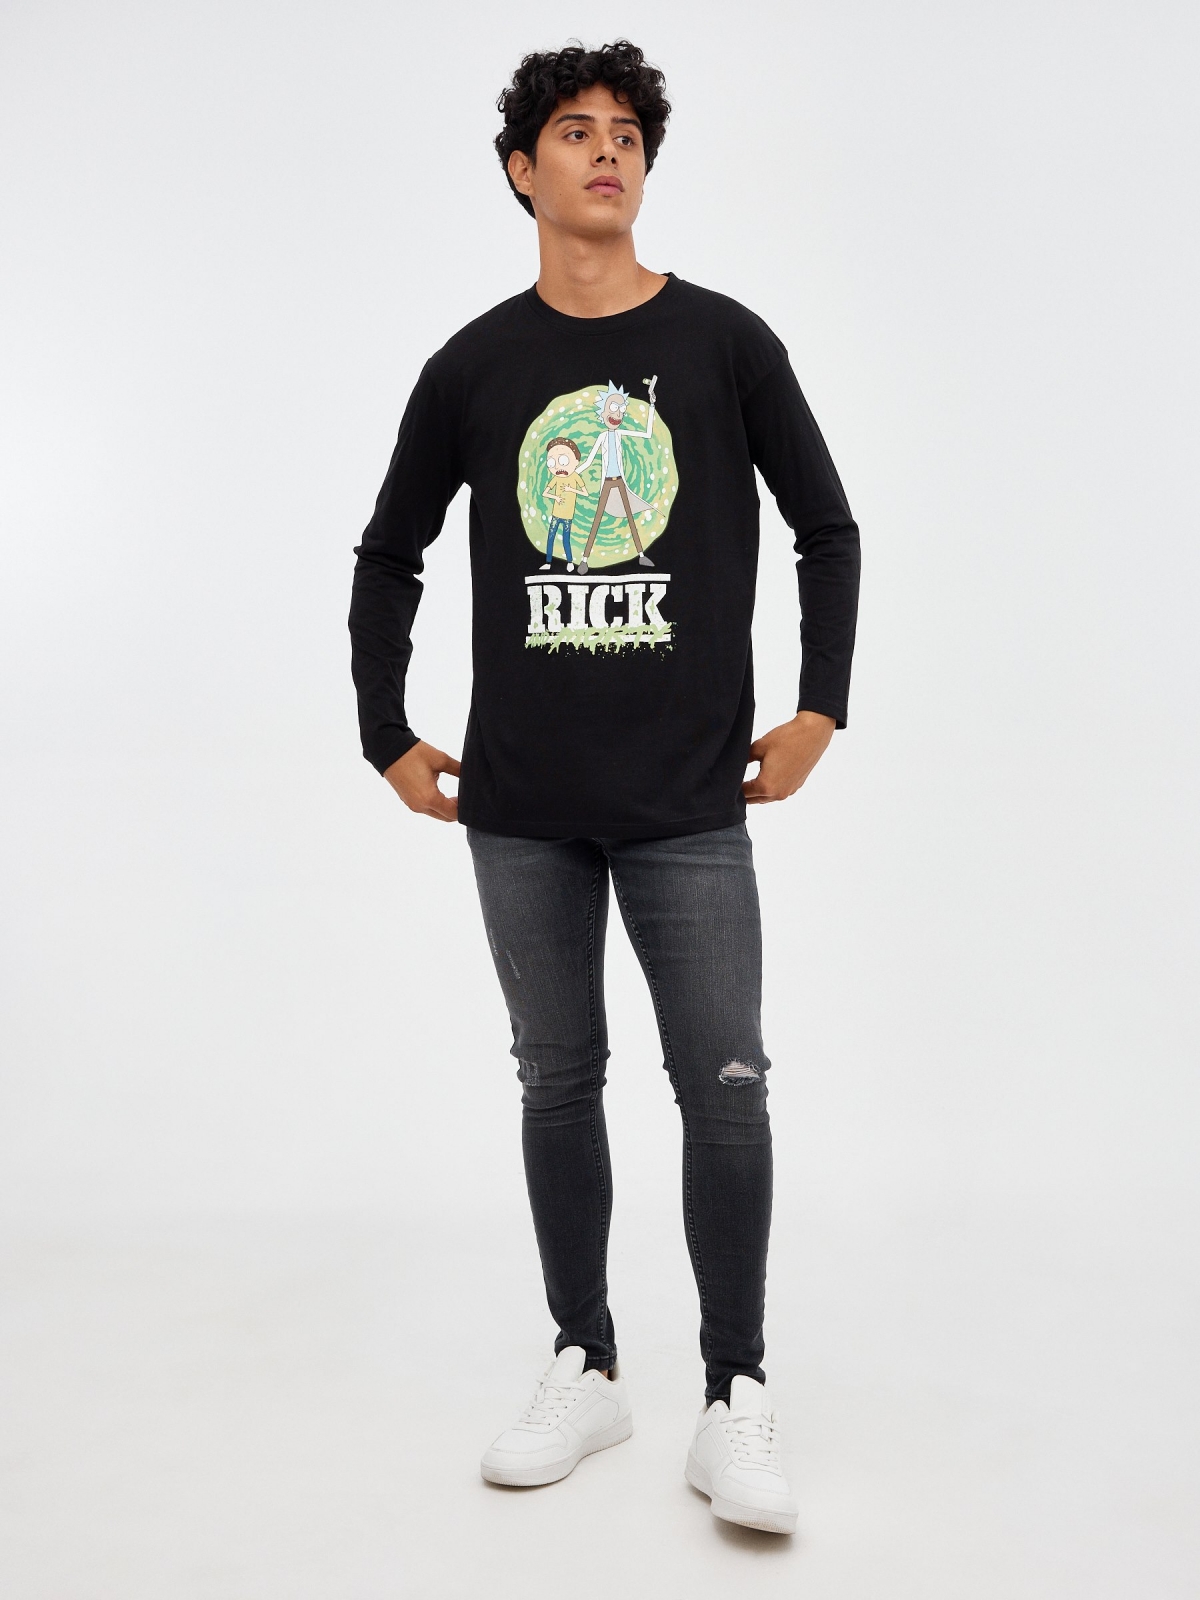 Rick&Morty series T-shirt black front view